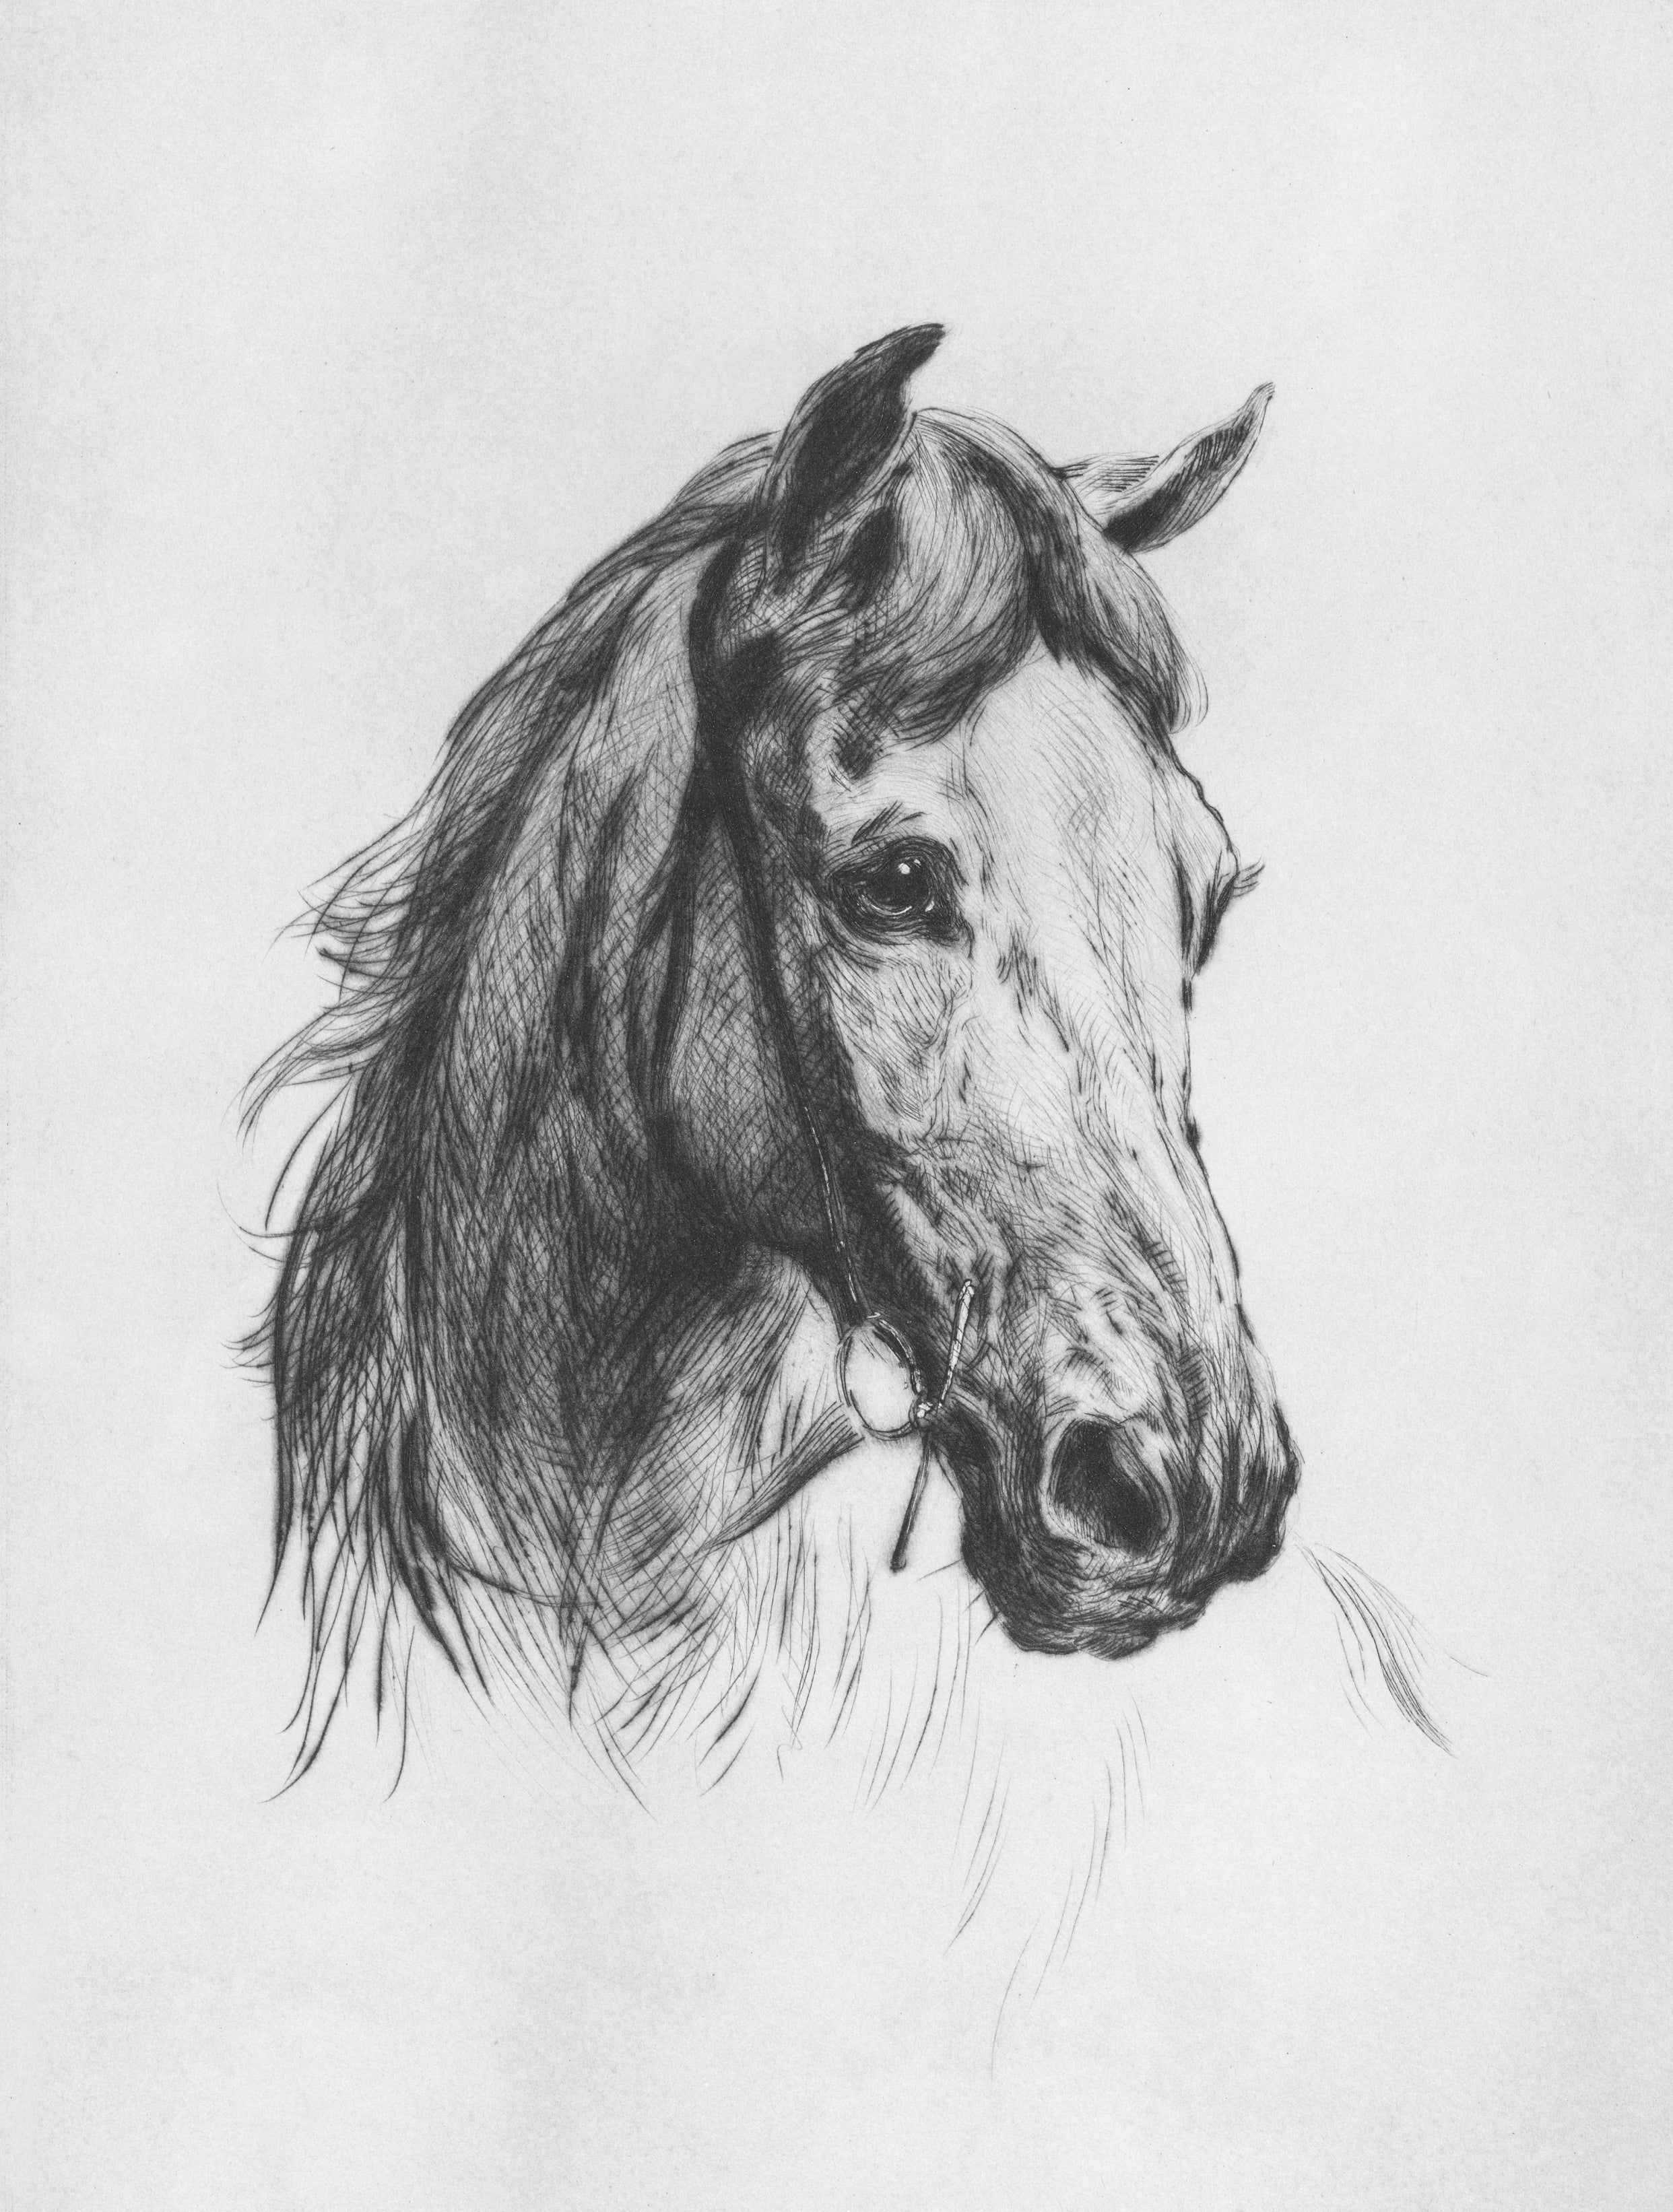 Vintage Still Life Print - Horse Sketch